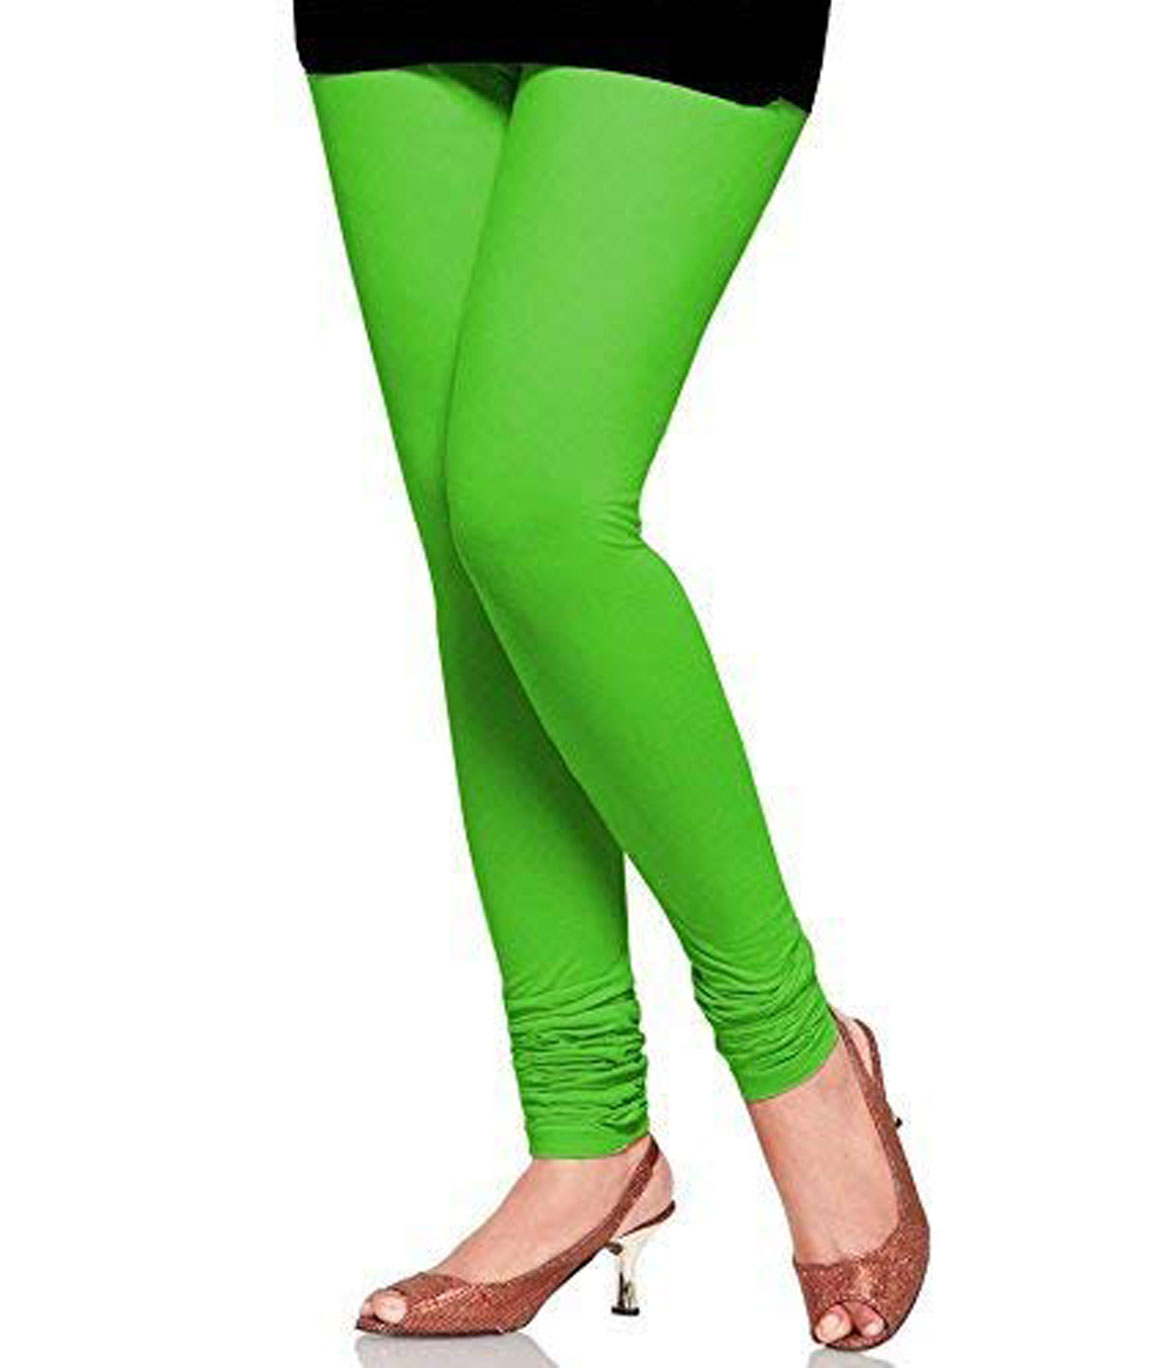 swag wear leggings churidar comfortable for girls stylish and soft leggings bright green b8